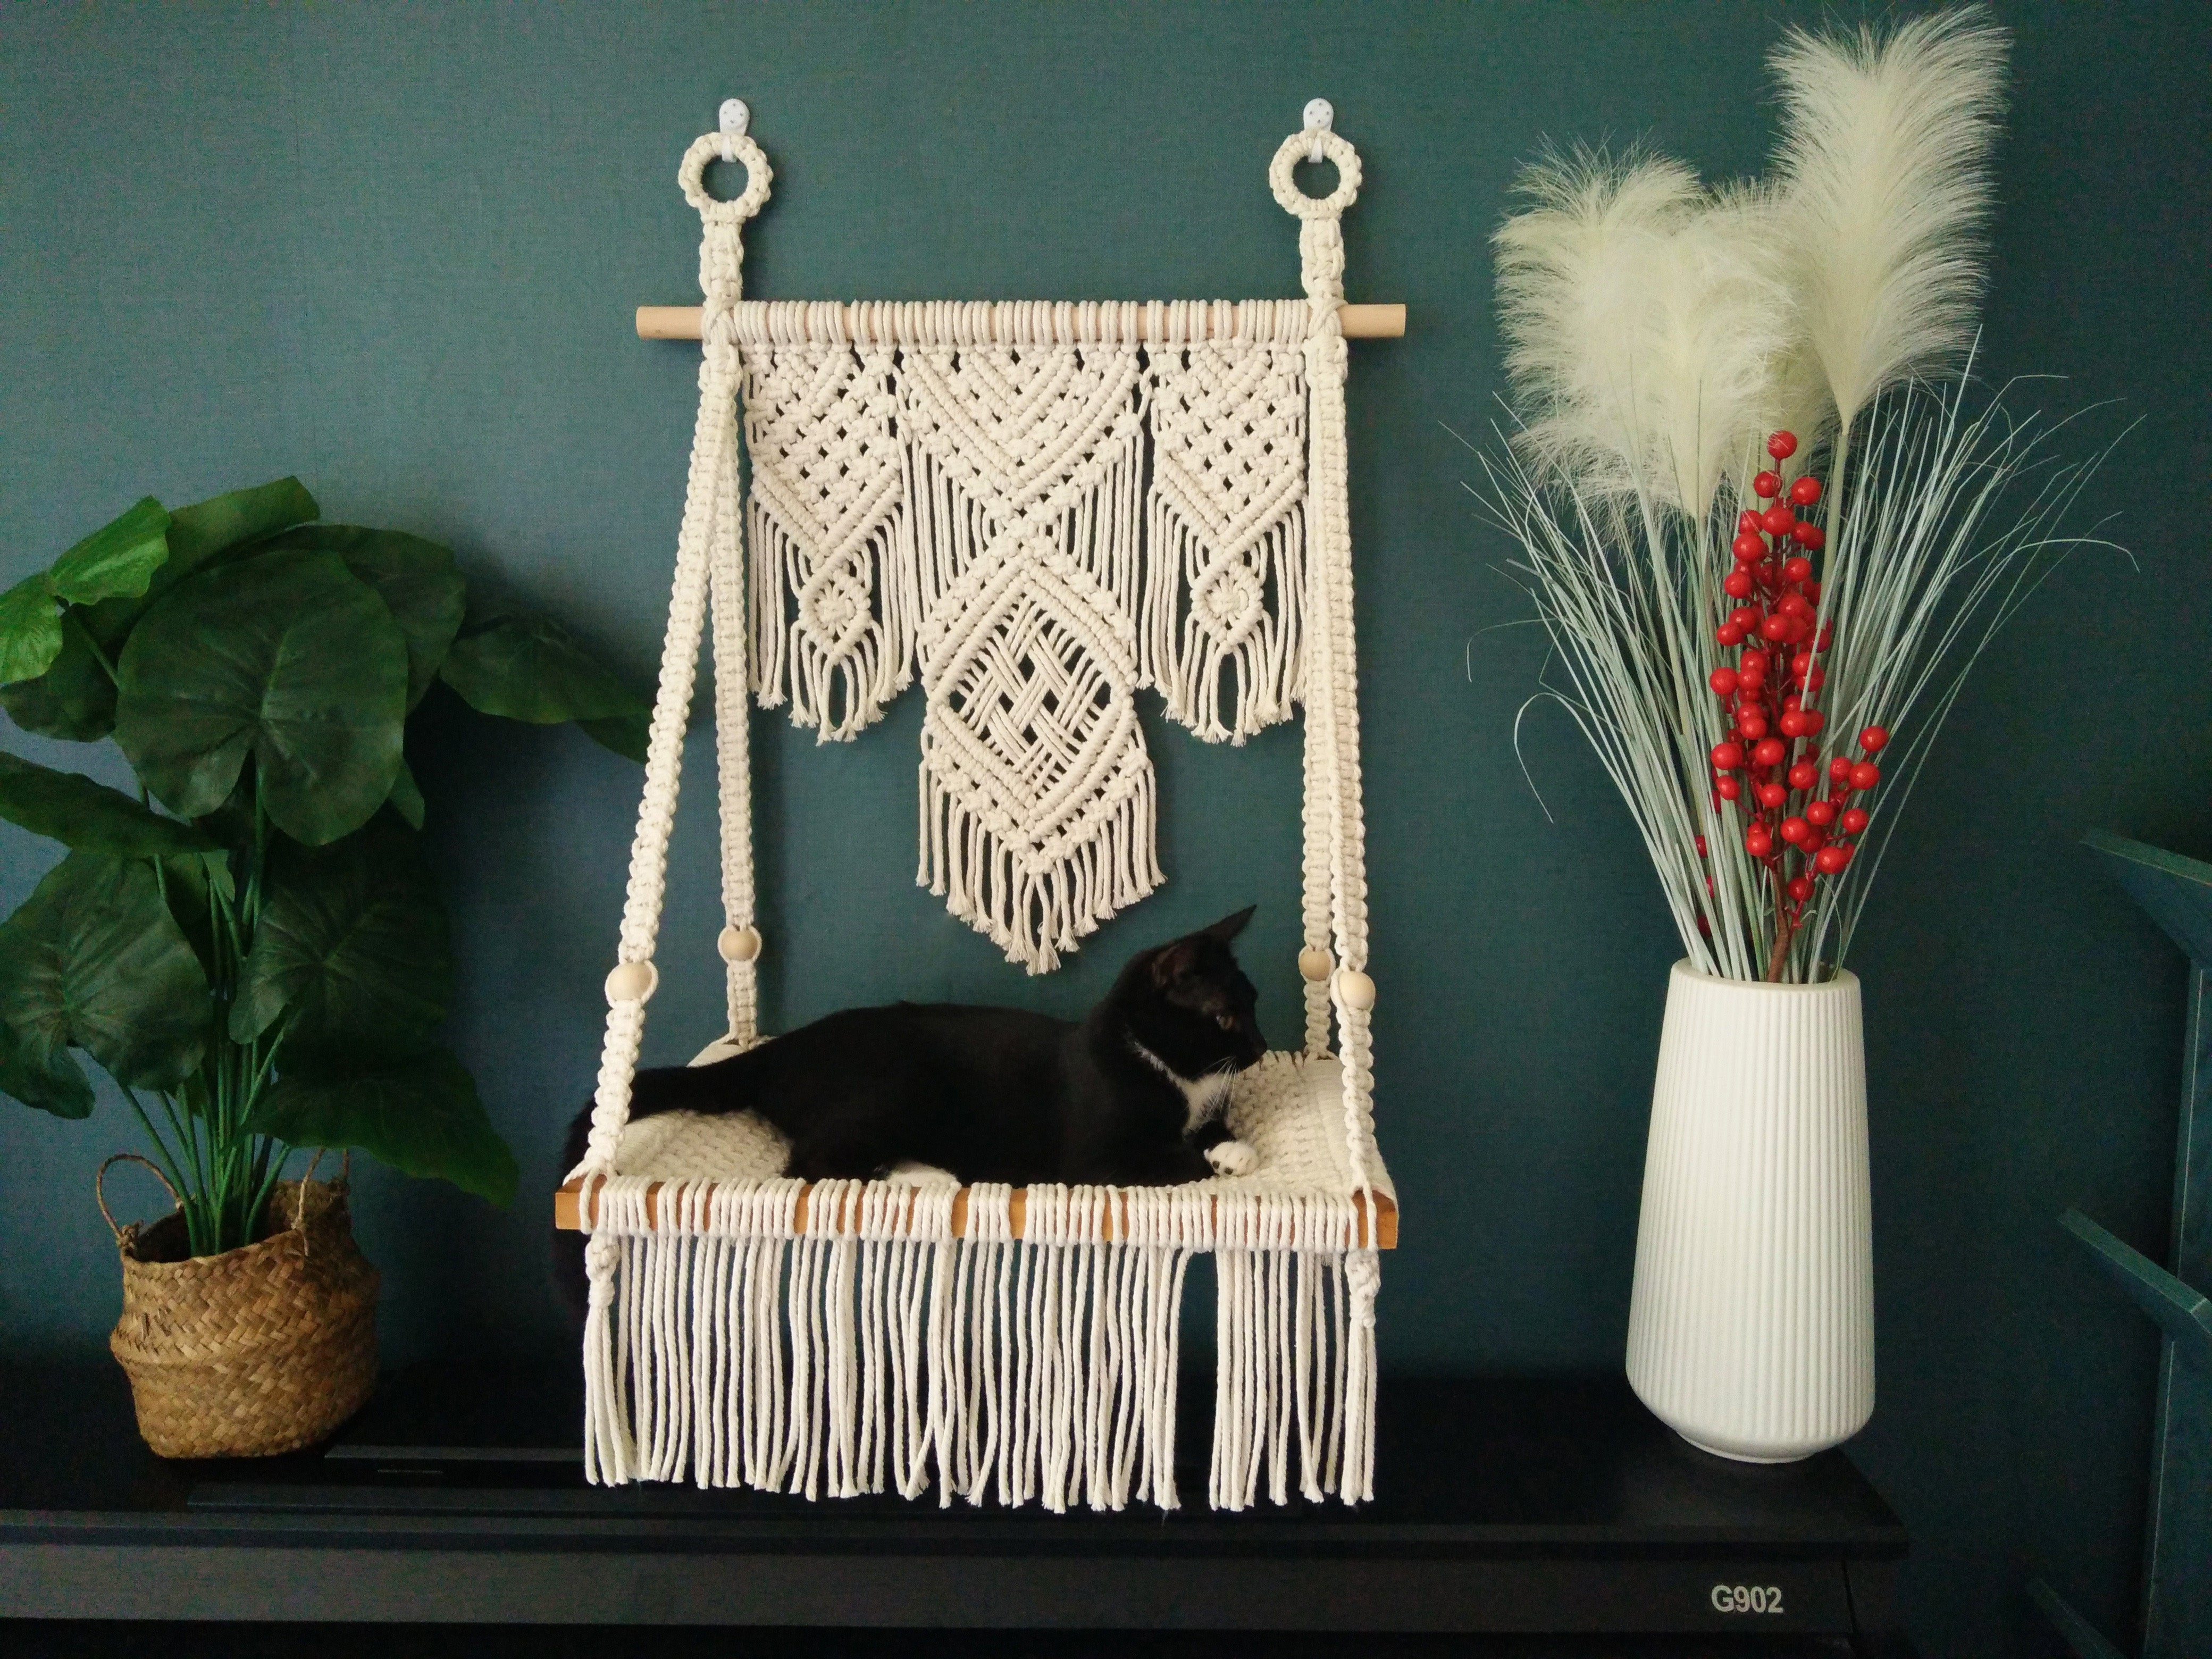 Macrame Cat wall furniture,Macrame cat bed/hammock,Bobo pet furniture,hanging cat house,cat tree